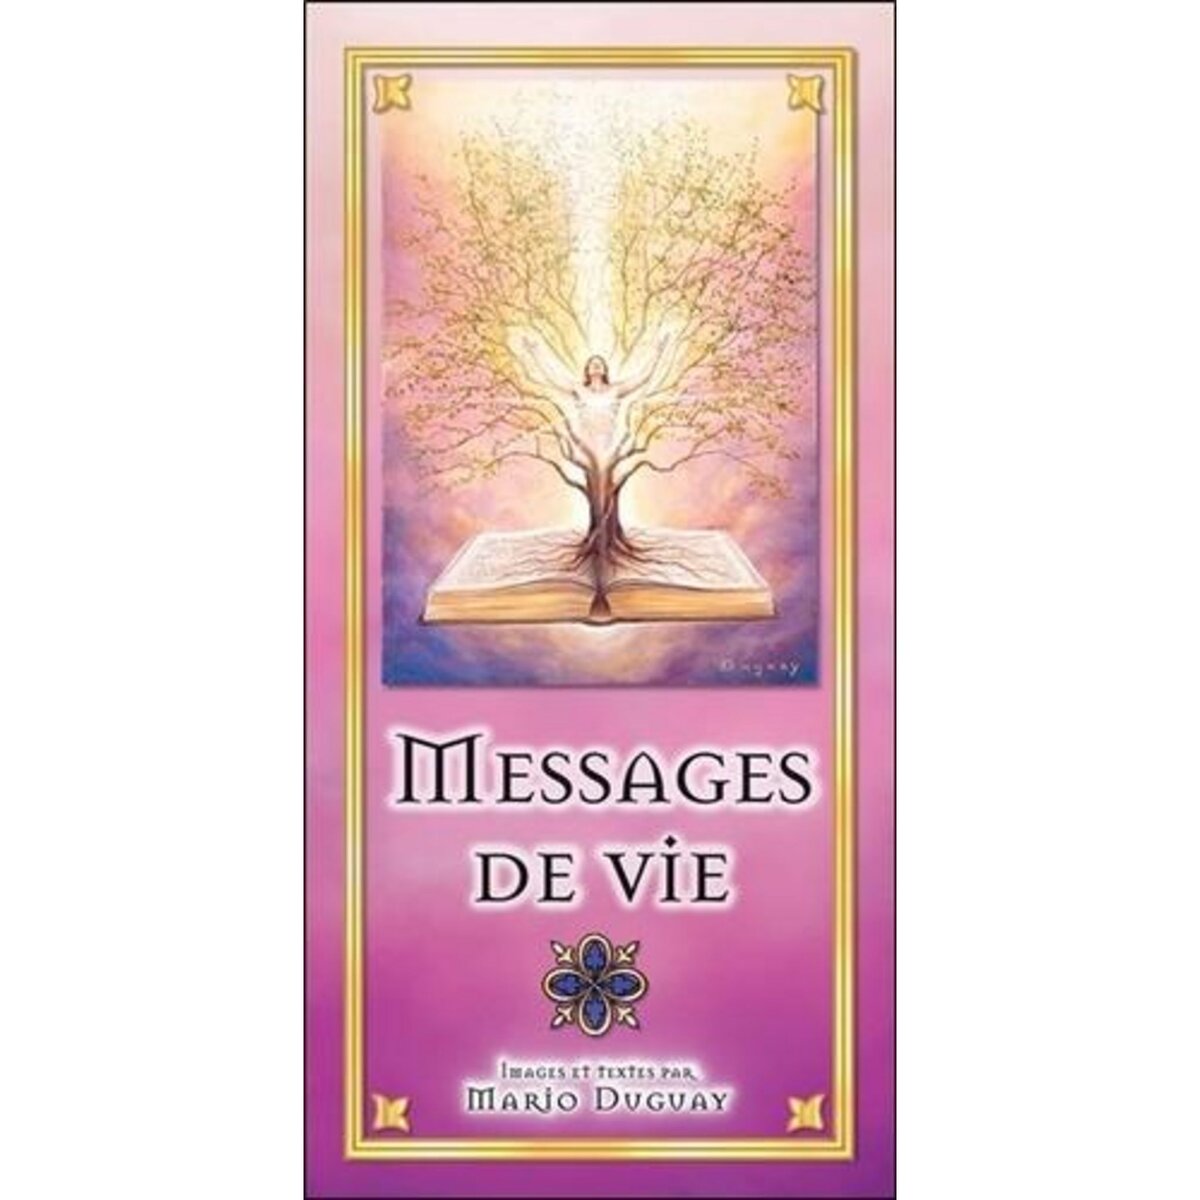  MESSAGES DE VIE. AVEC 54 CARTES, Duguay Mario